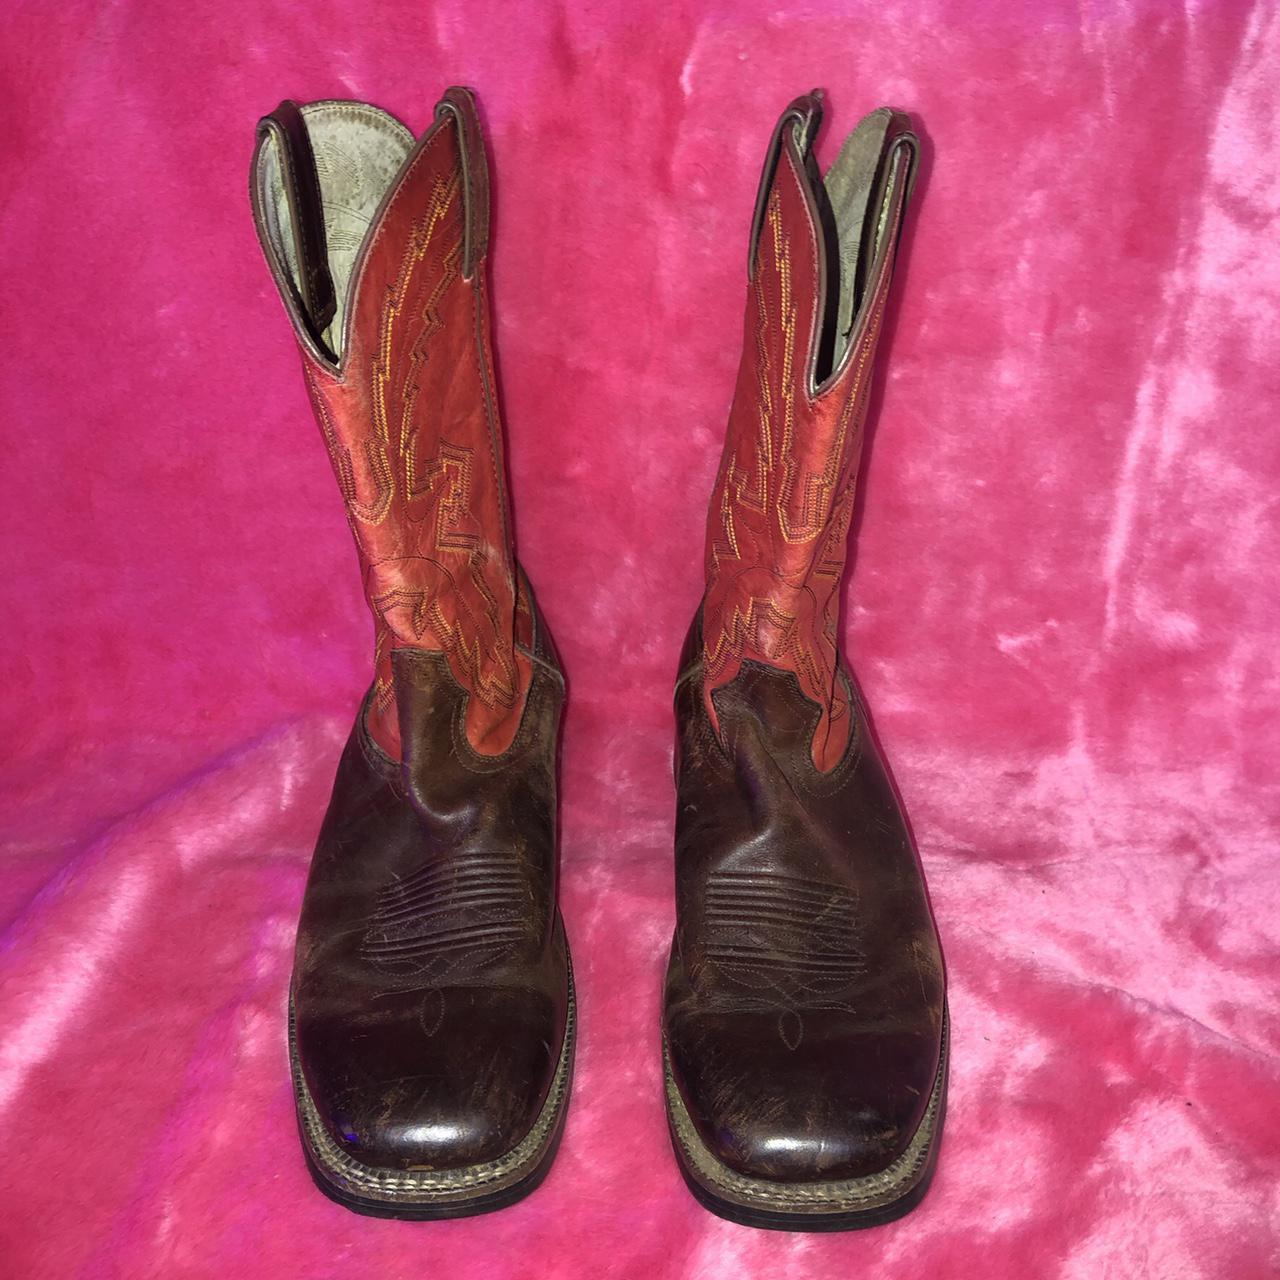 Product Image 1 - Vintage Durango leather cowboy/western boots.